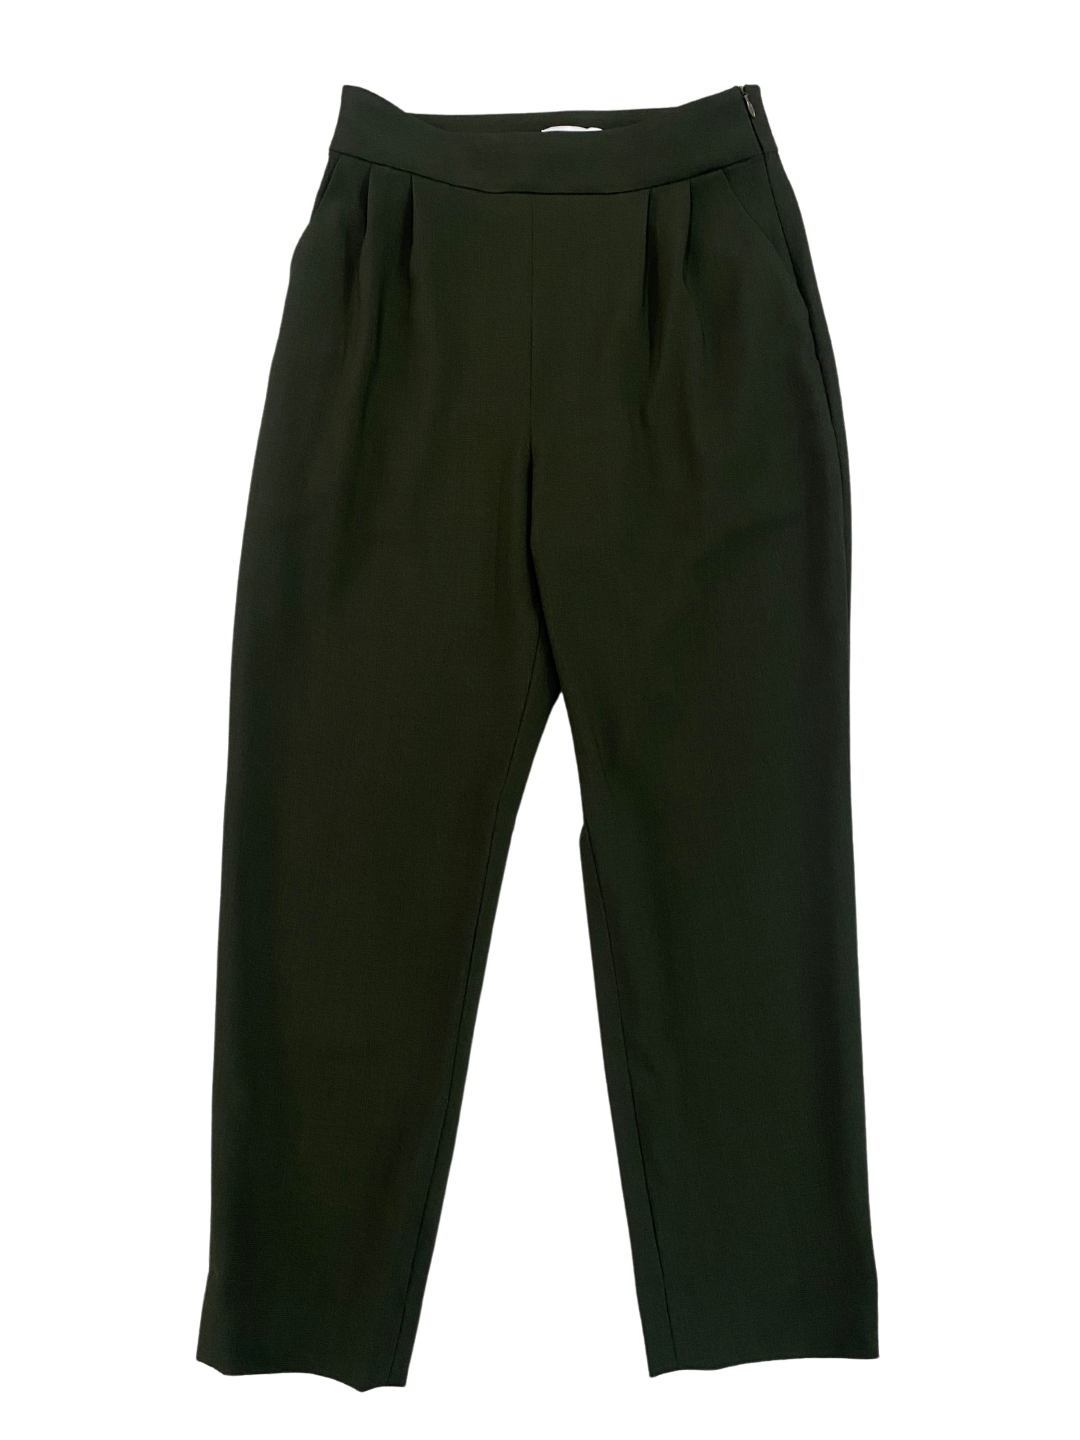 NO.1 Tailored Trousers (Khaki)